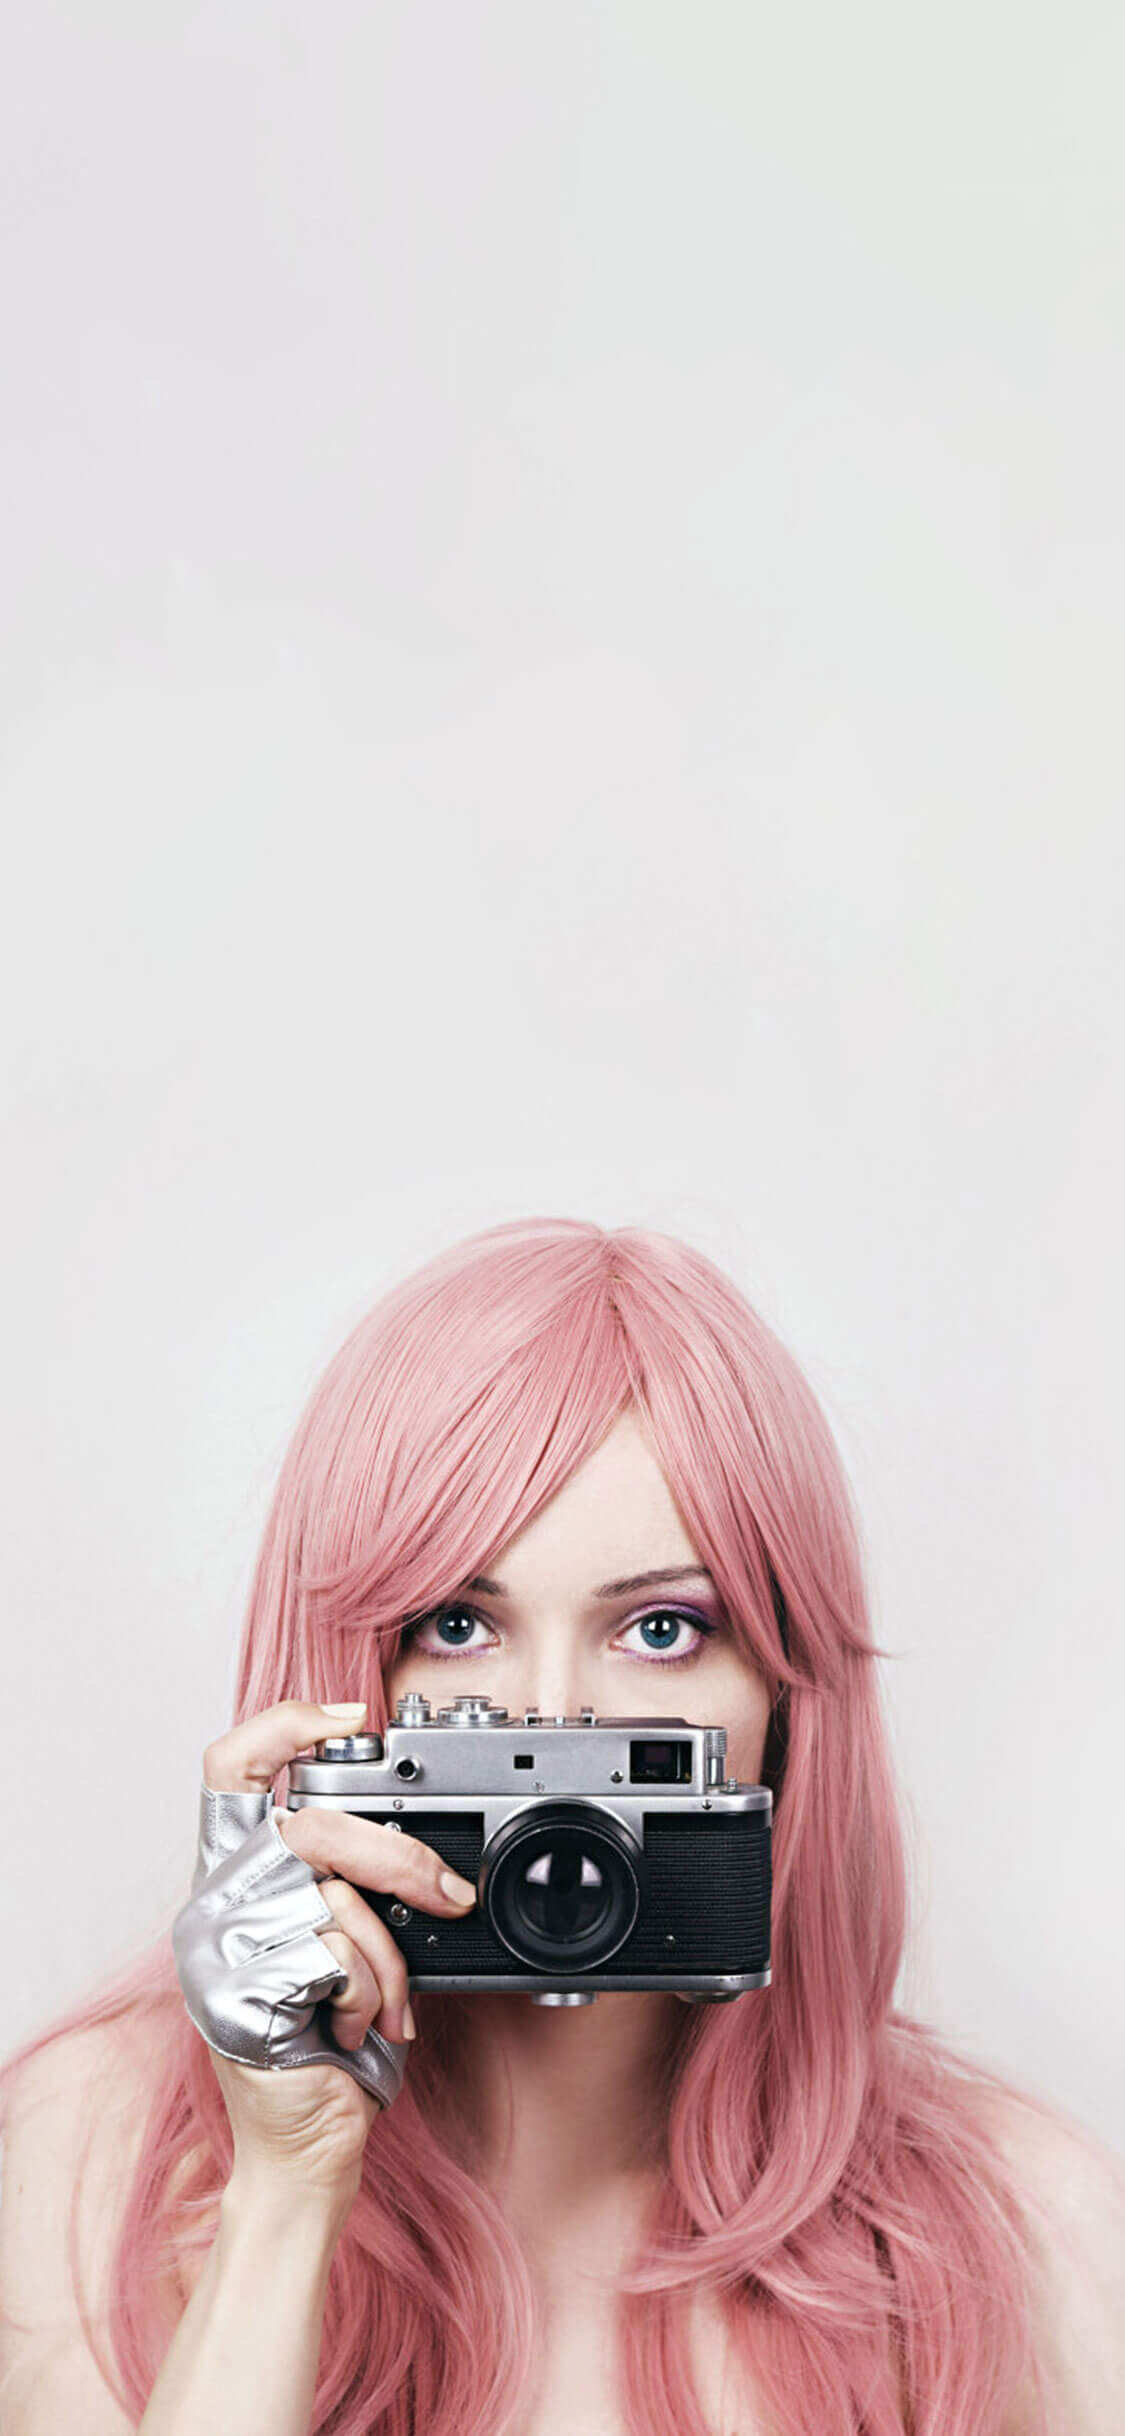 Cool-girl-beholdning-et-kamera